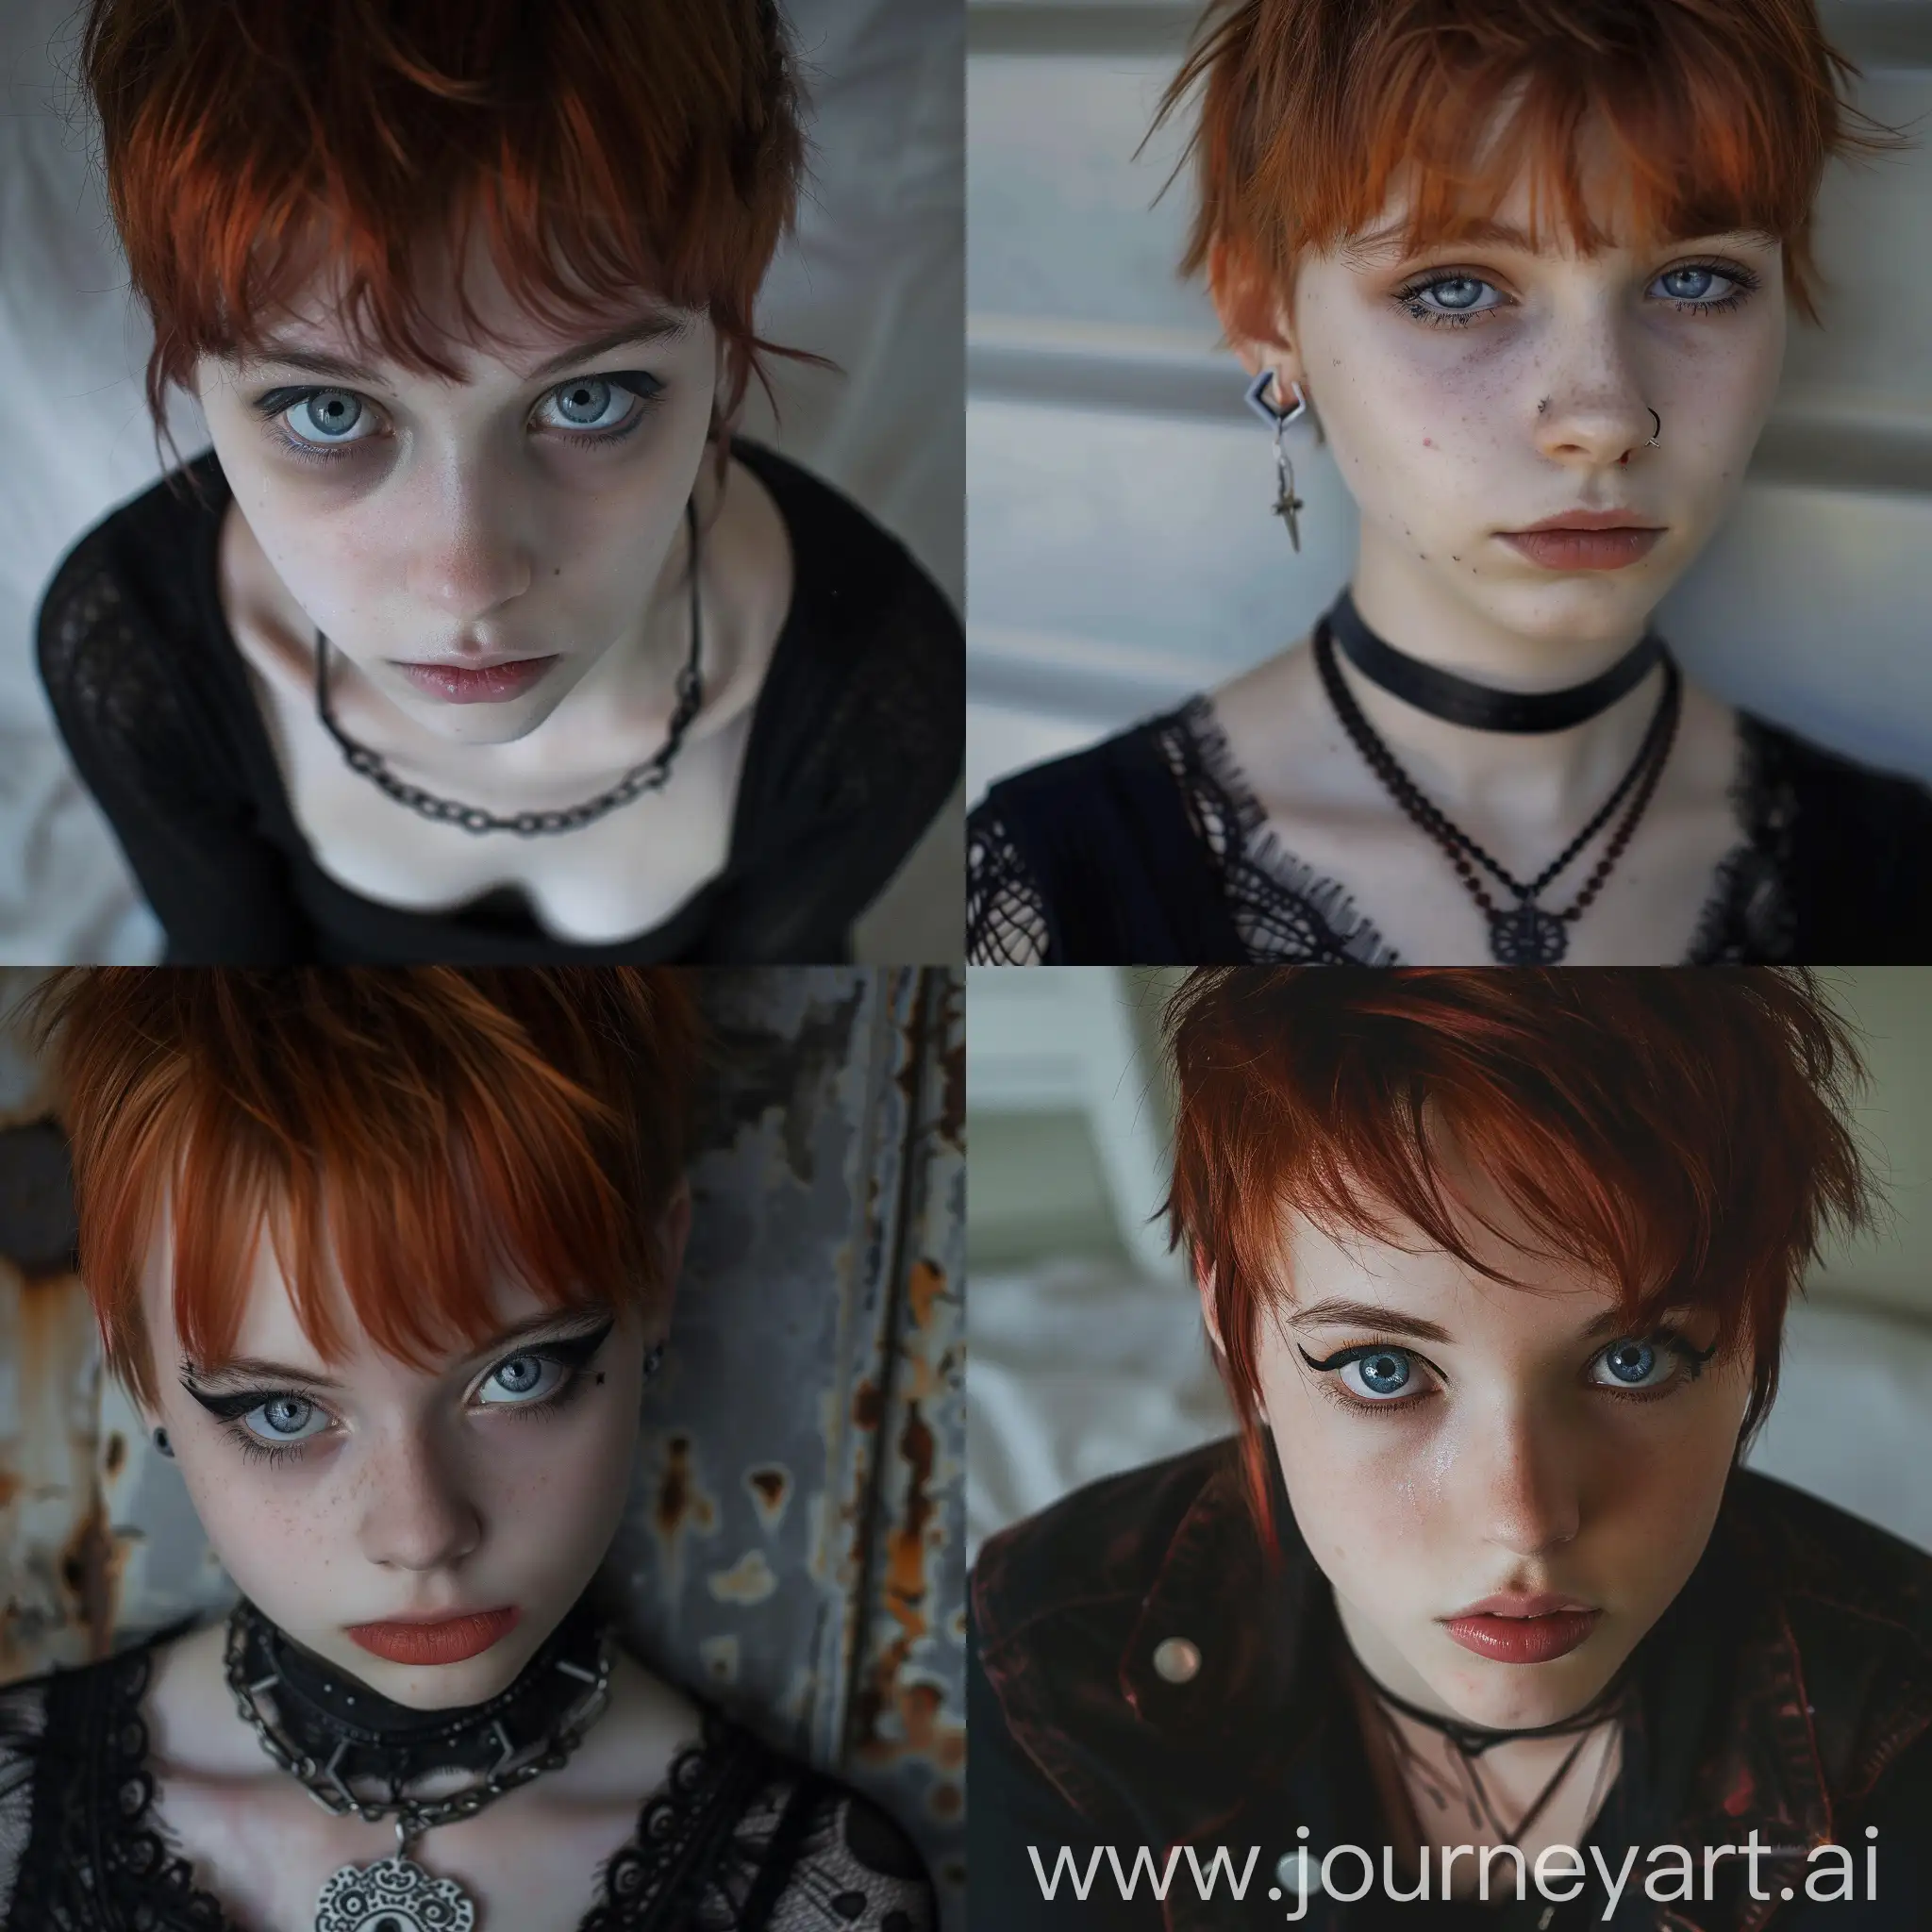 16 year old girl, goth, pixie cut, red hair, icy blue eyes